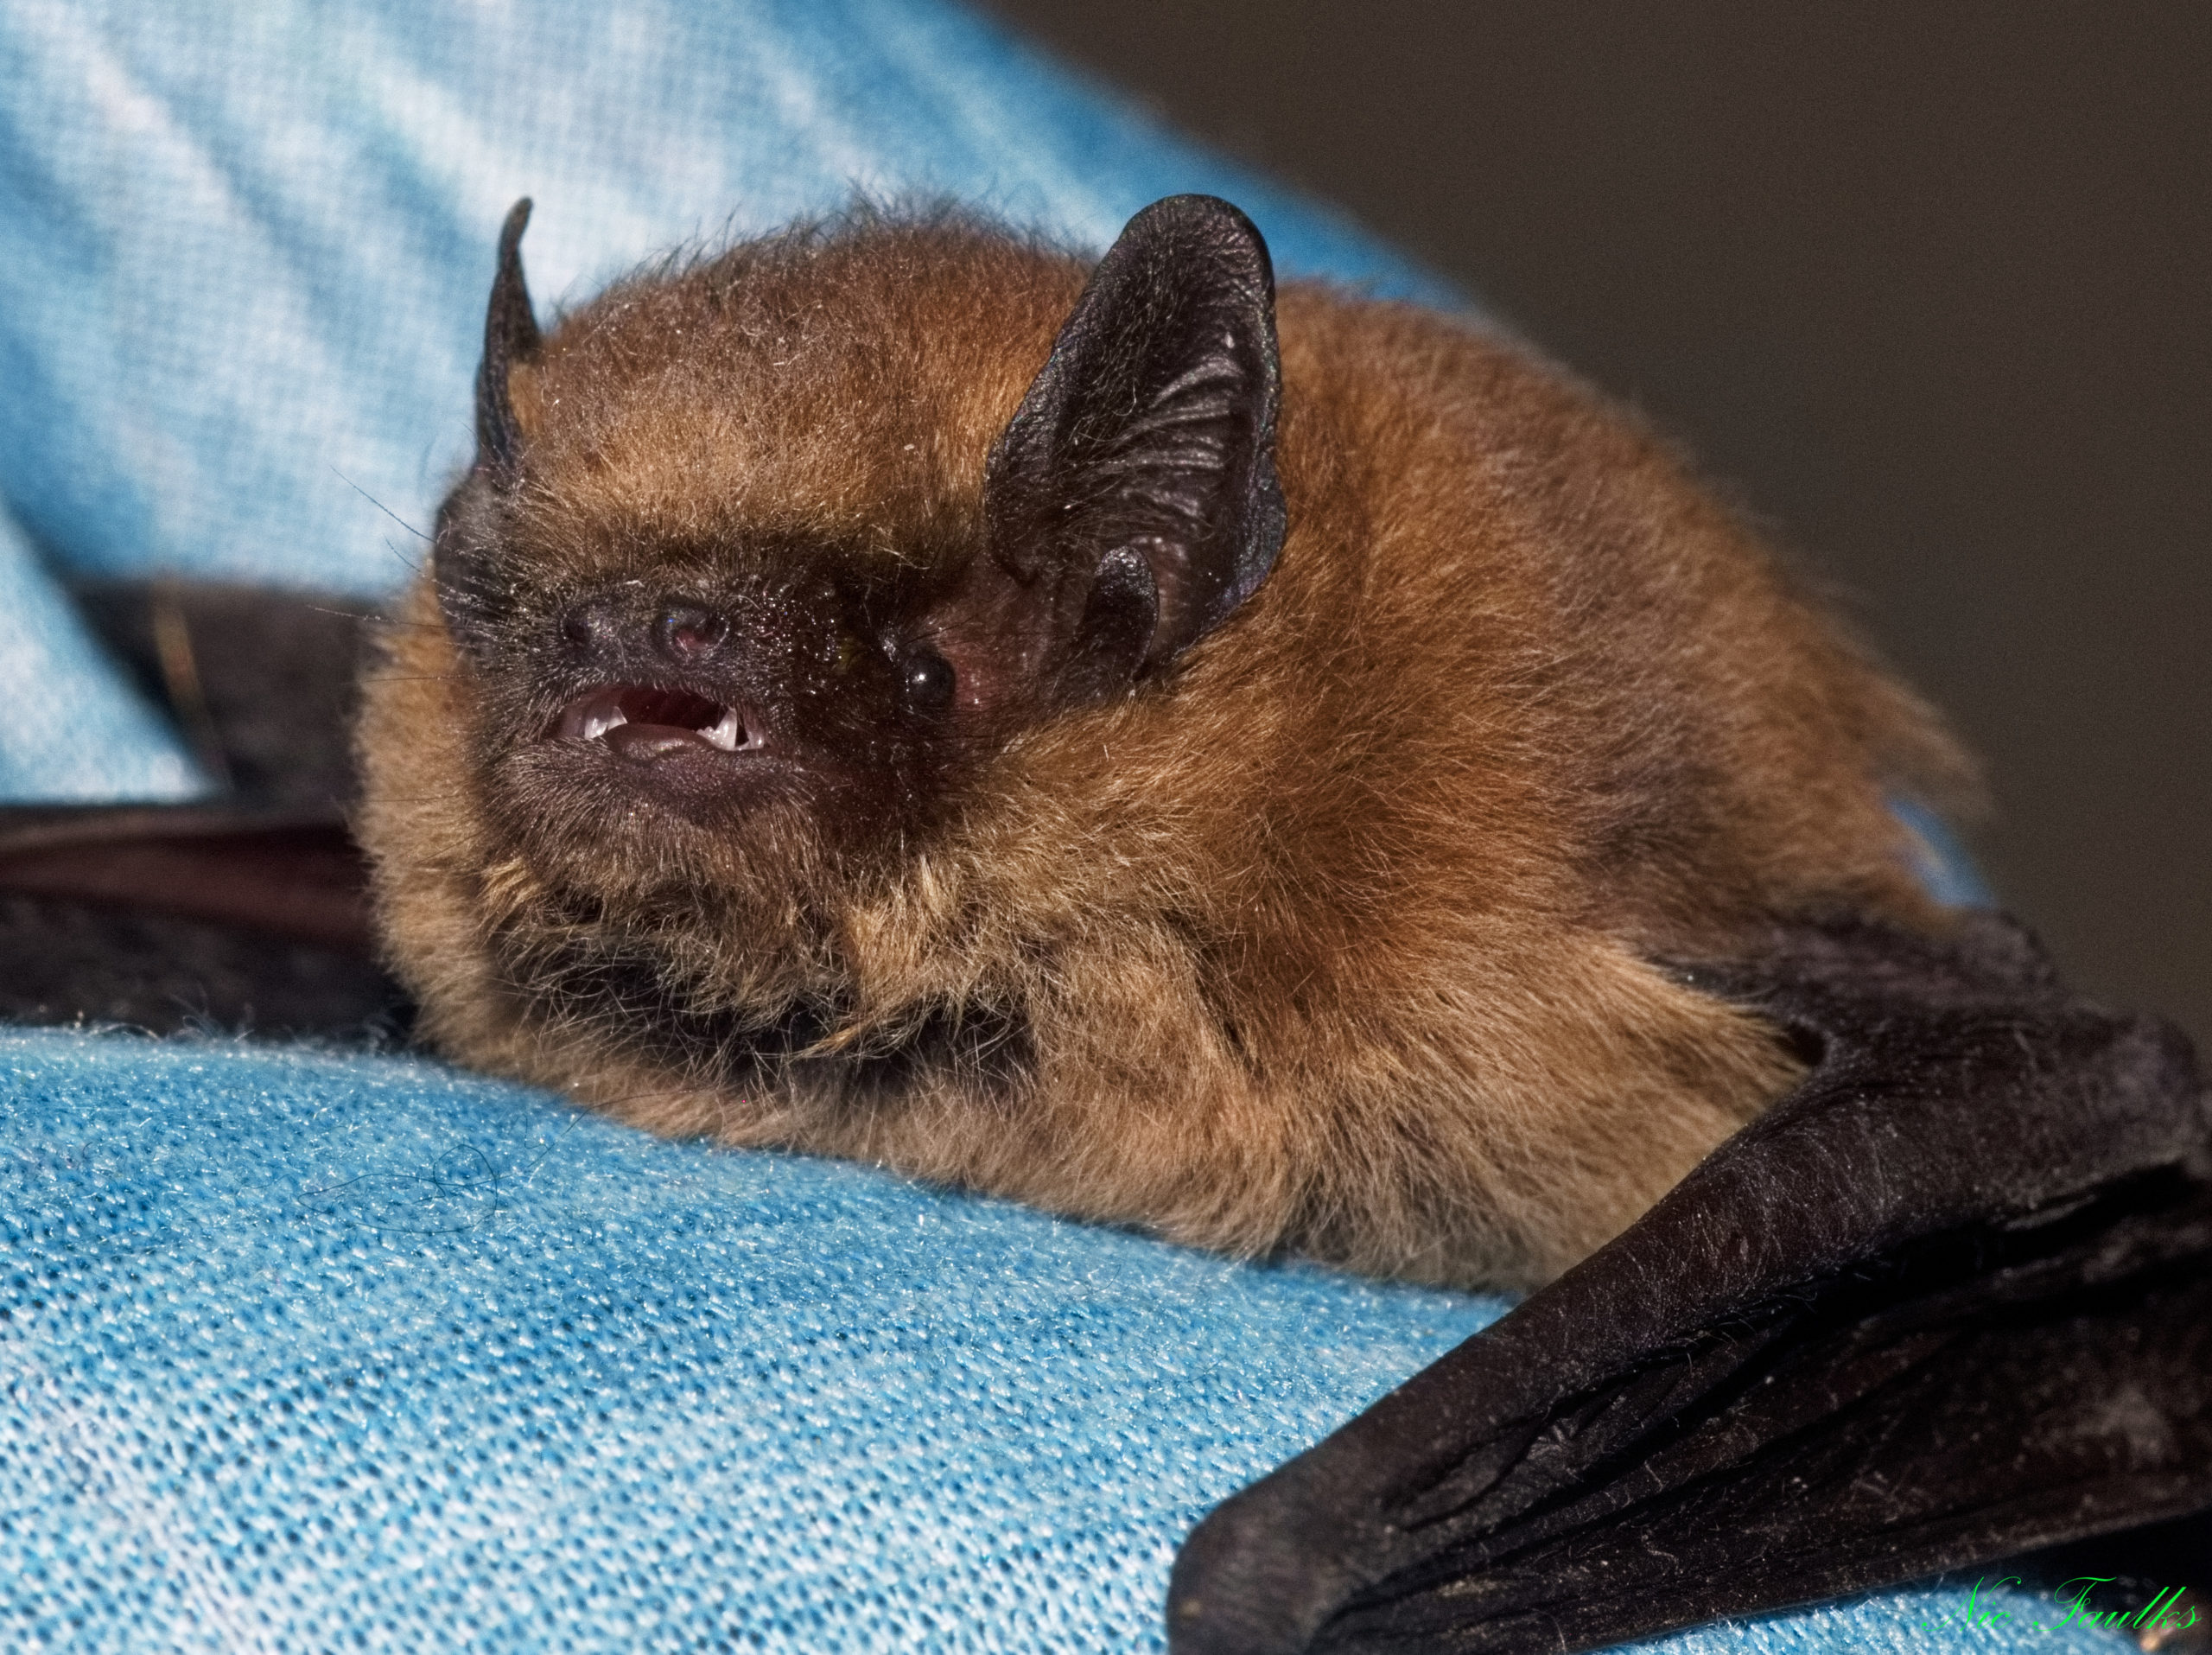 Common Pipistrelle bat